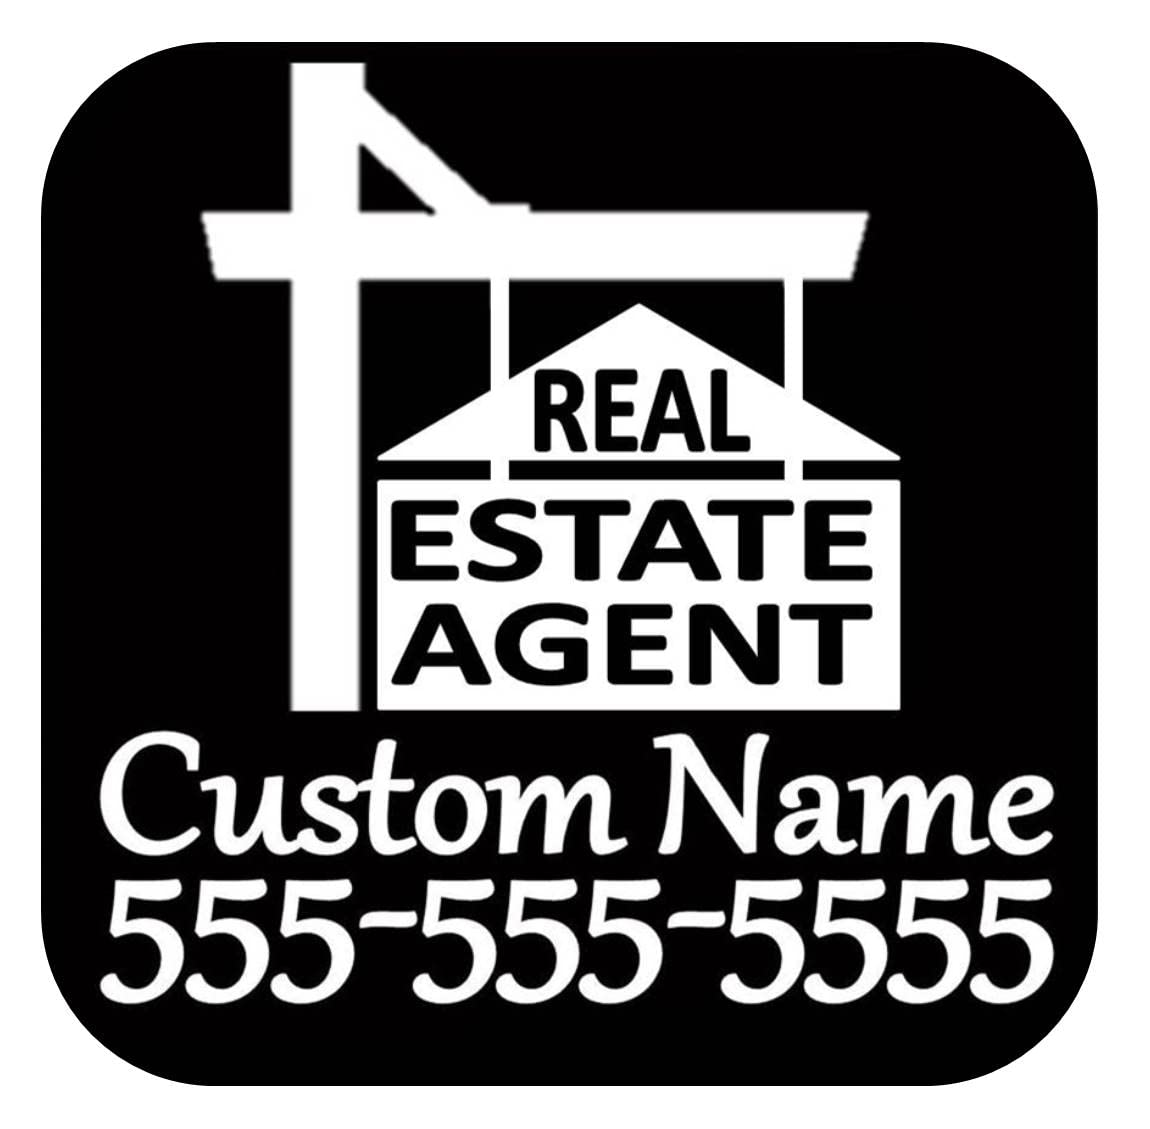 Custom Real Estate Sticker OS 144 7